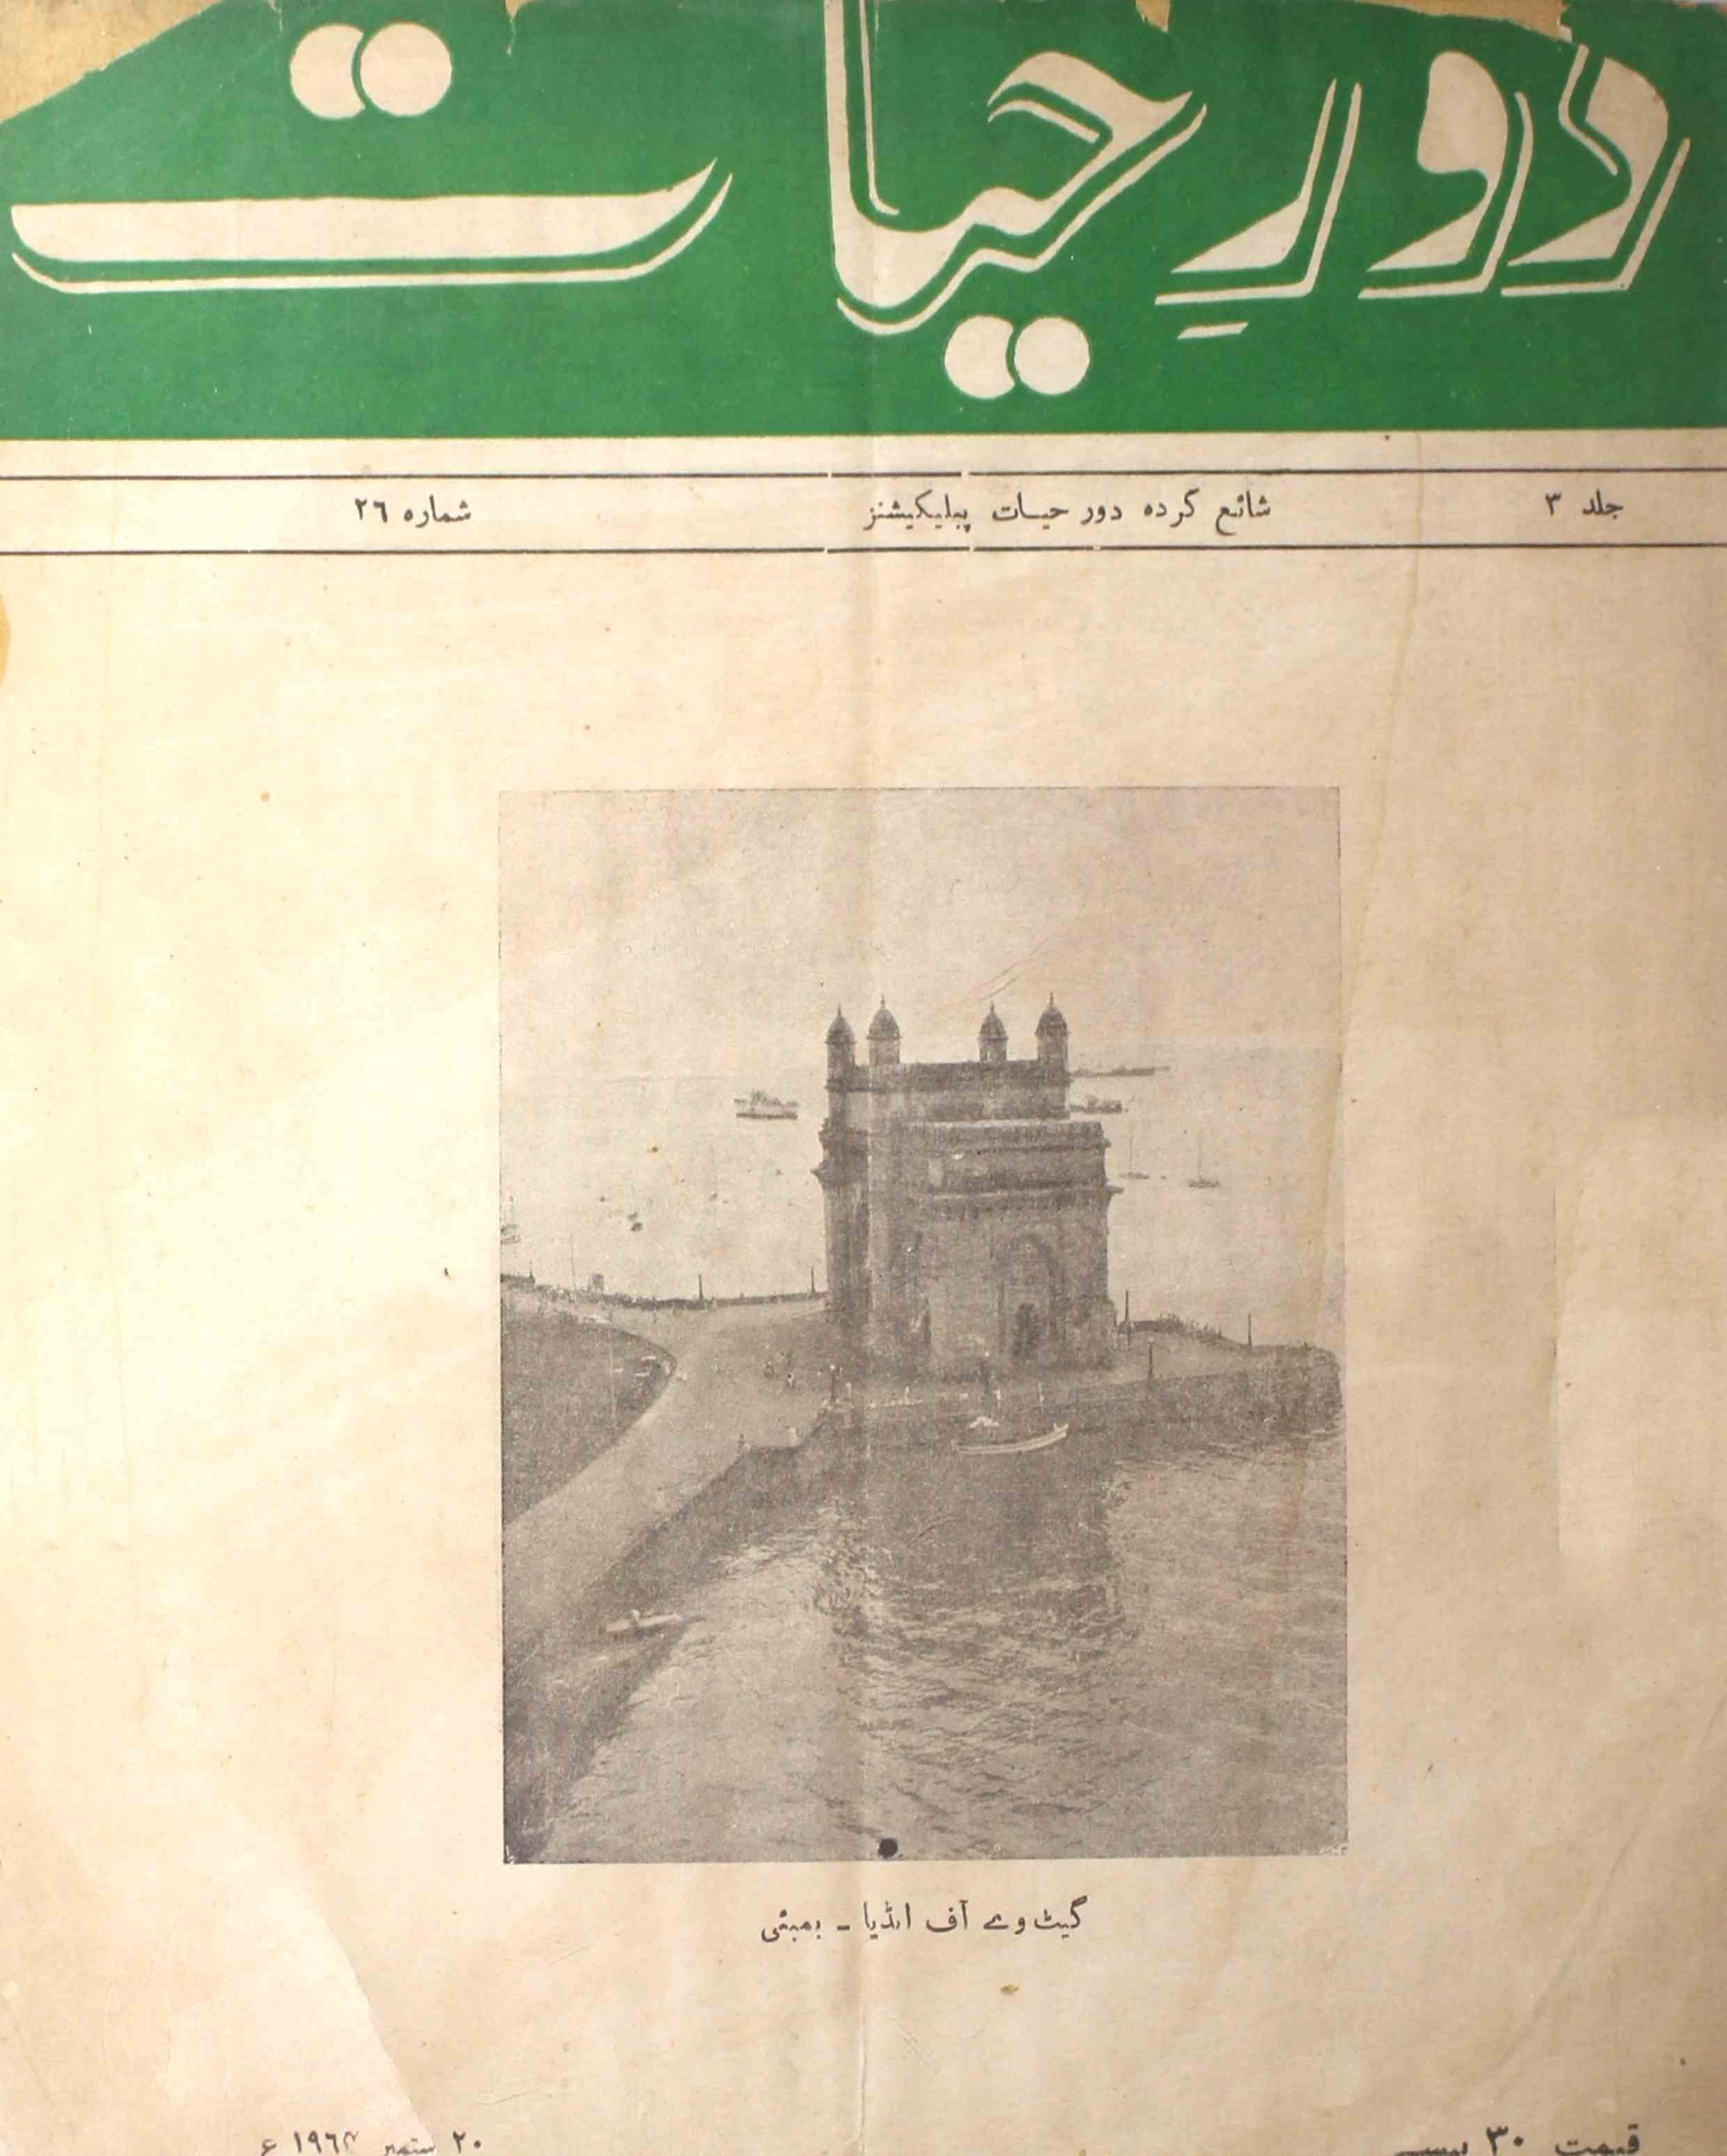 Daur-e-hayat-shumara-number-026-qaisar-mazhar-husain-magazines